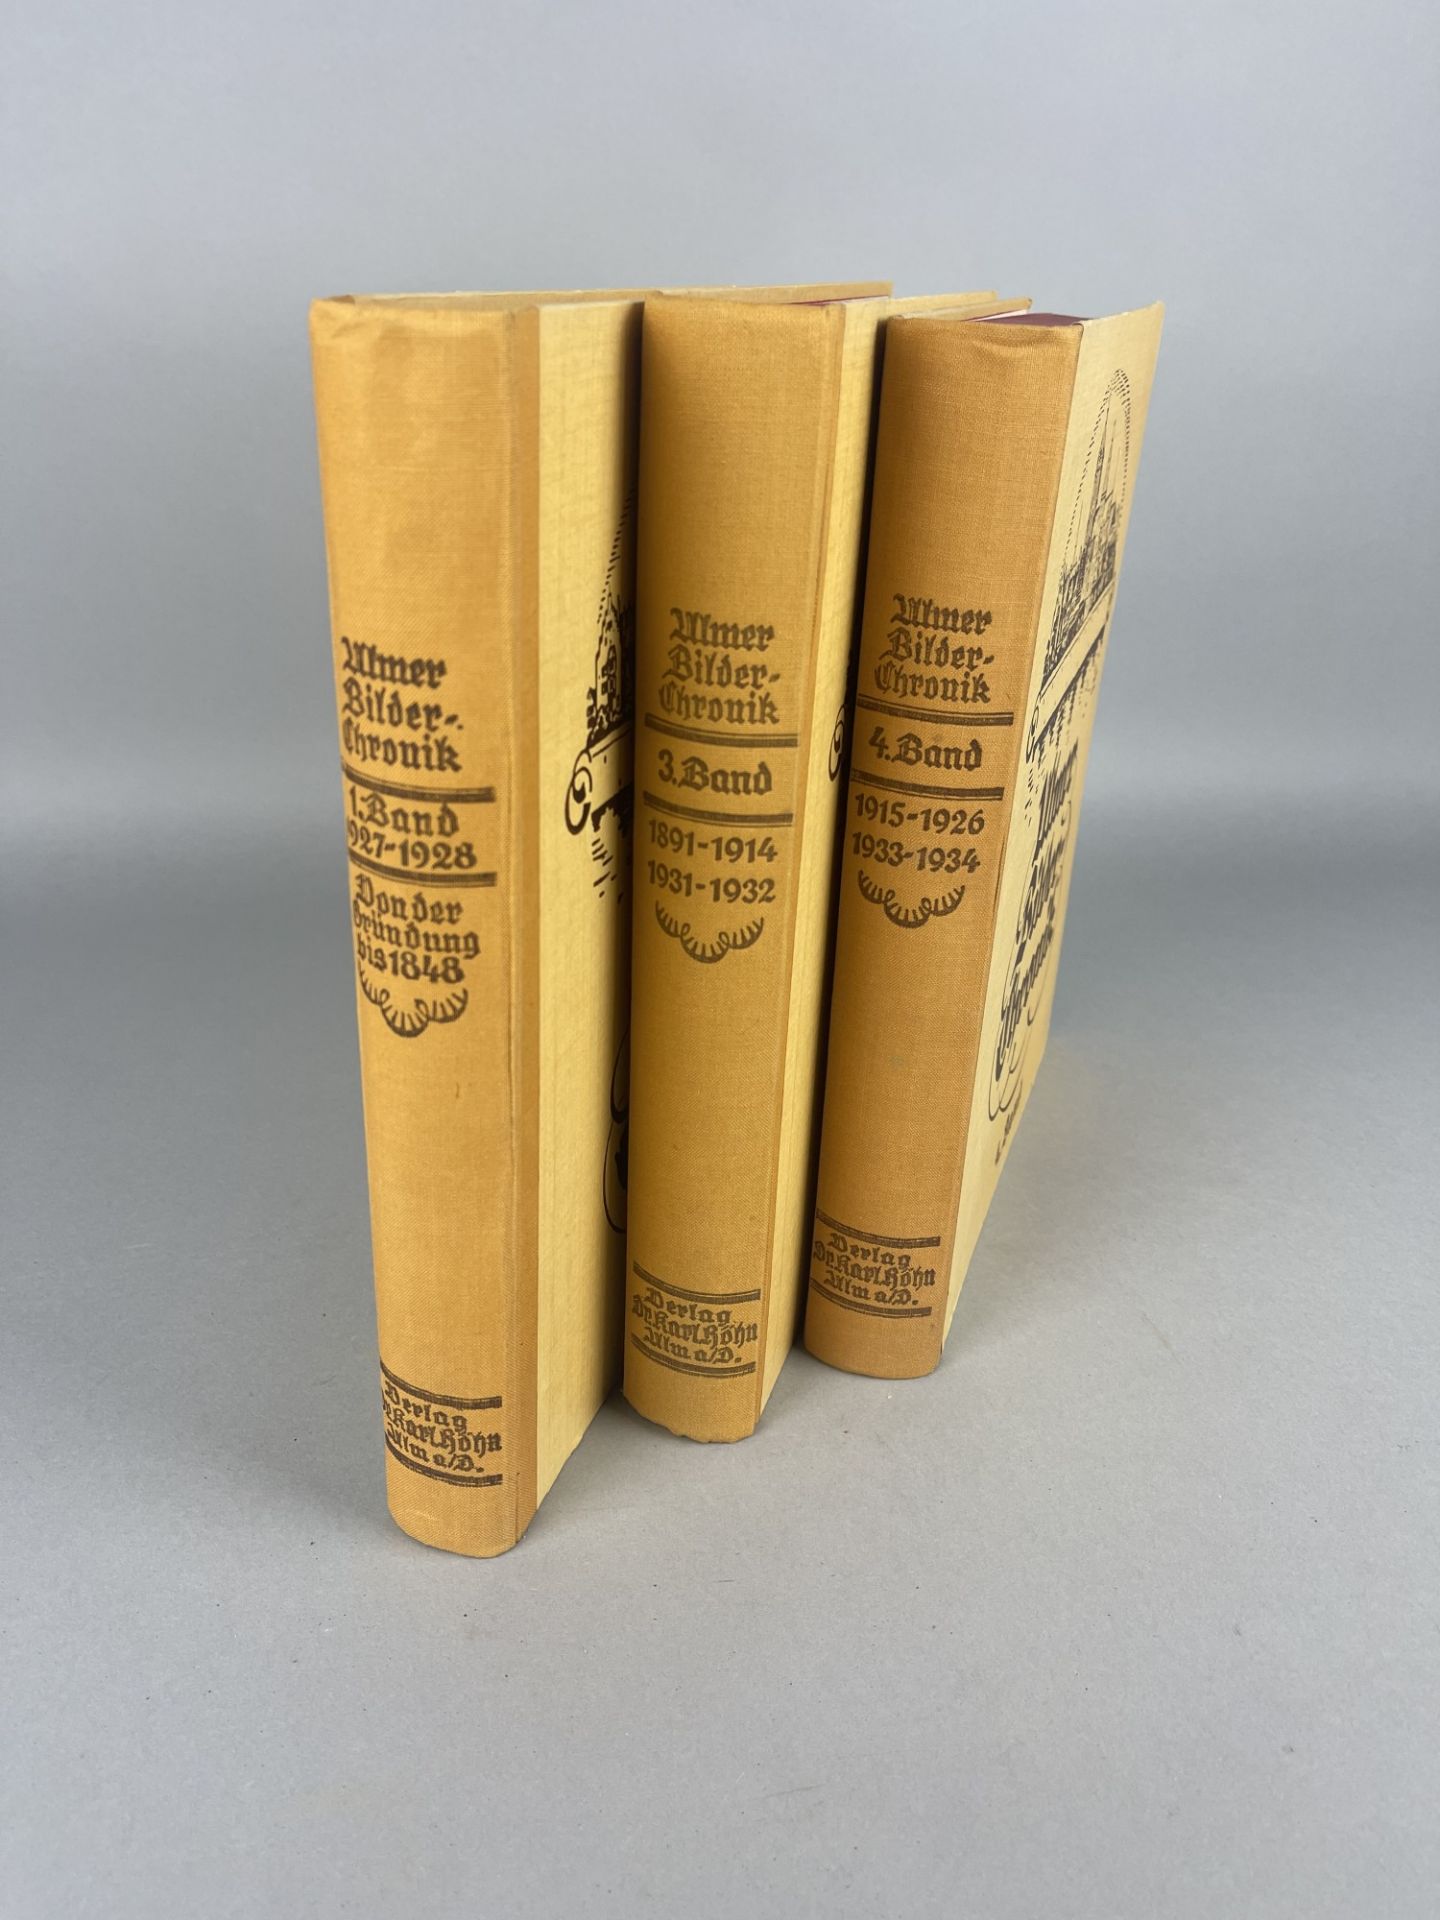 Dr. Karl Höhn, Ulmer Bilder Chronik volume 1, 3 and 4, 1929-1937 - Image 2 of 5